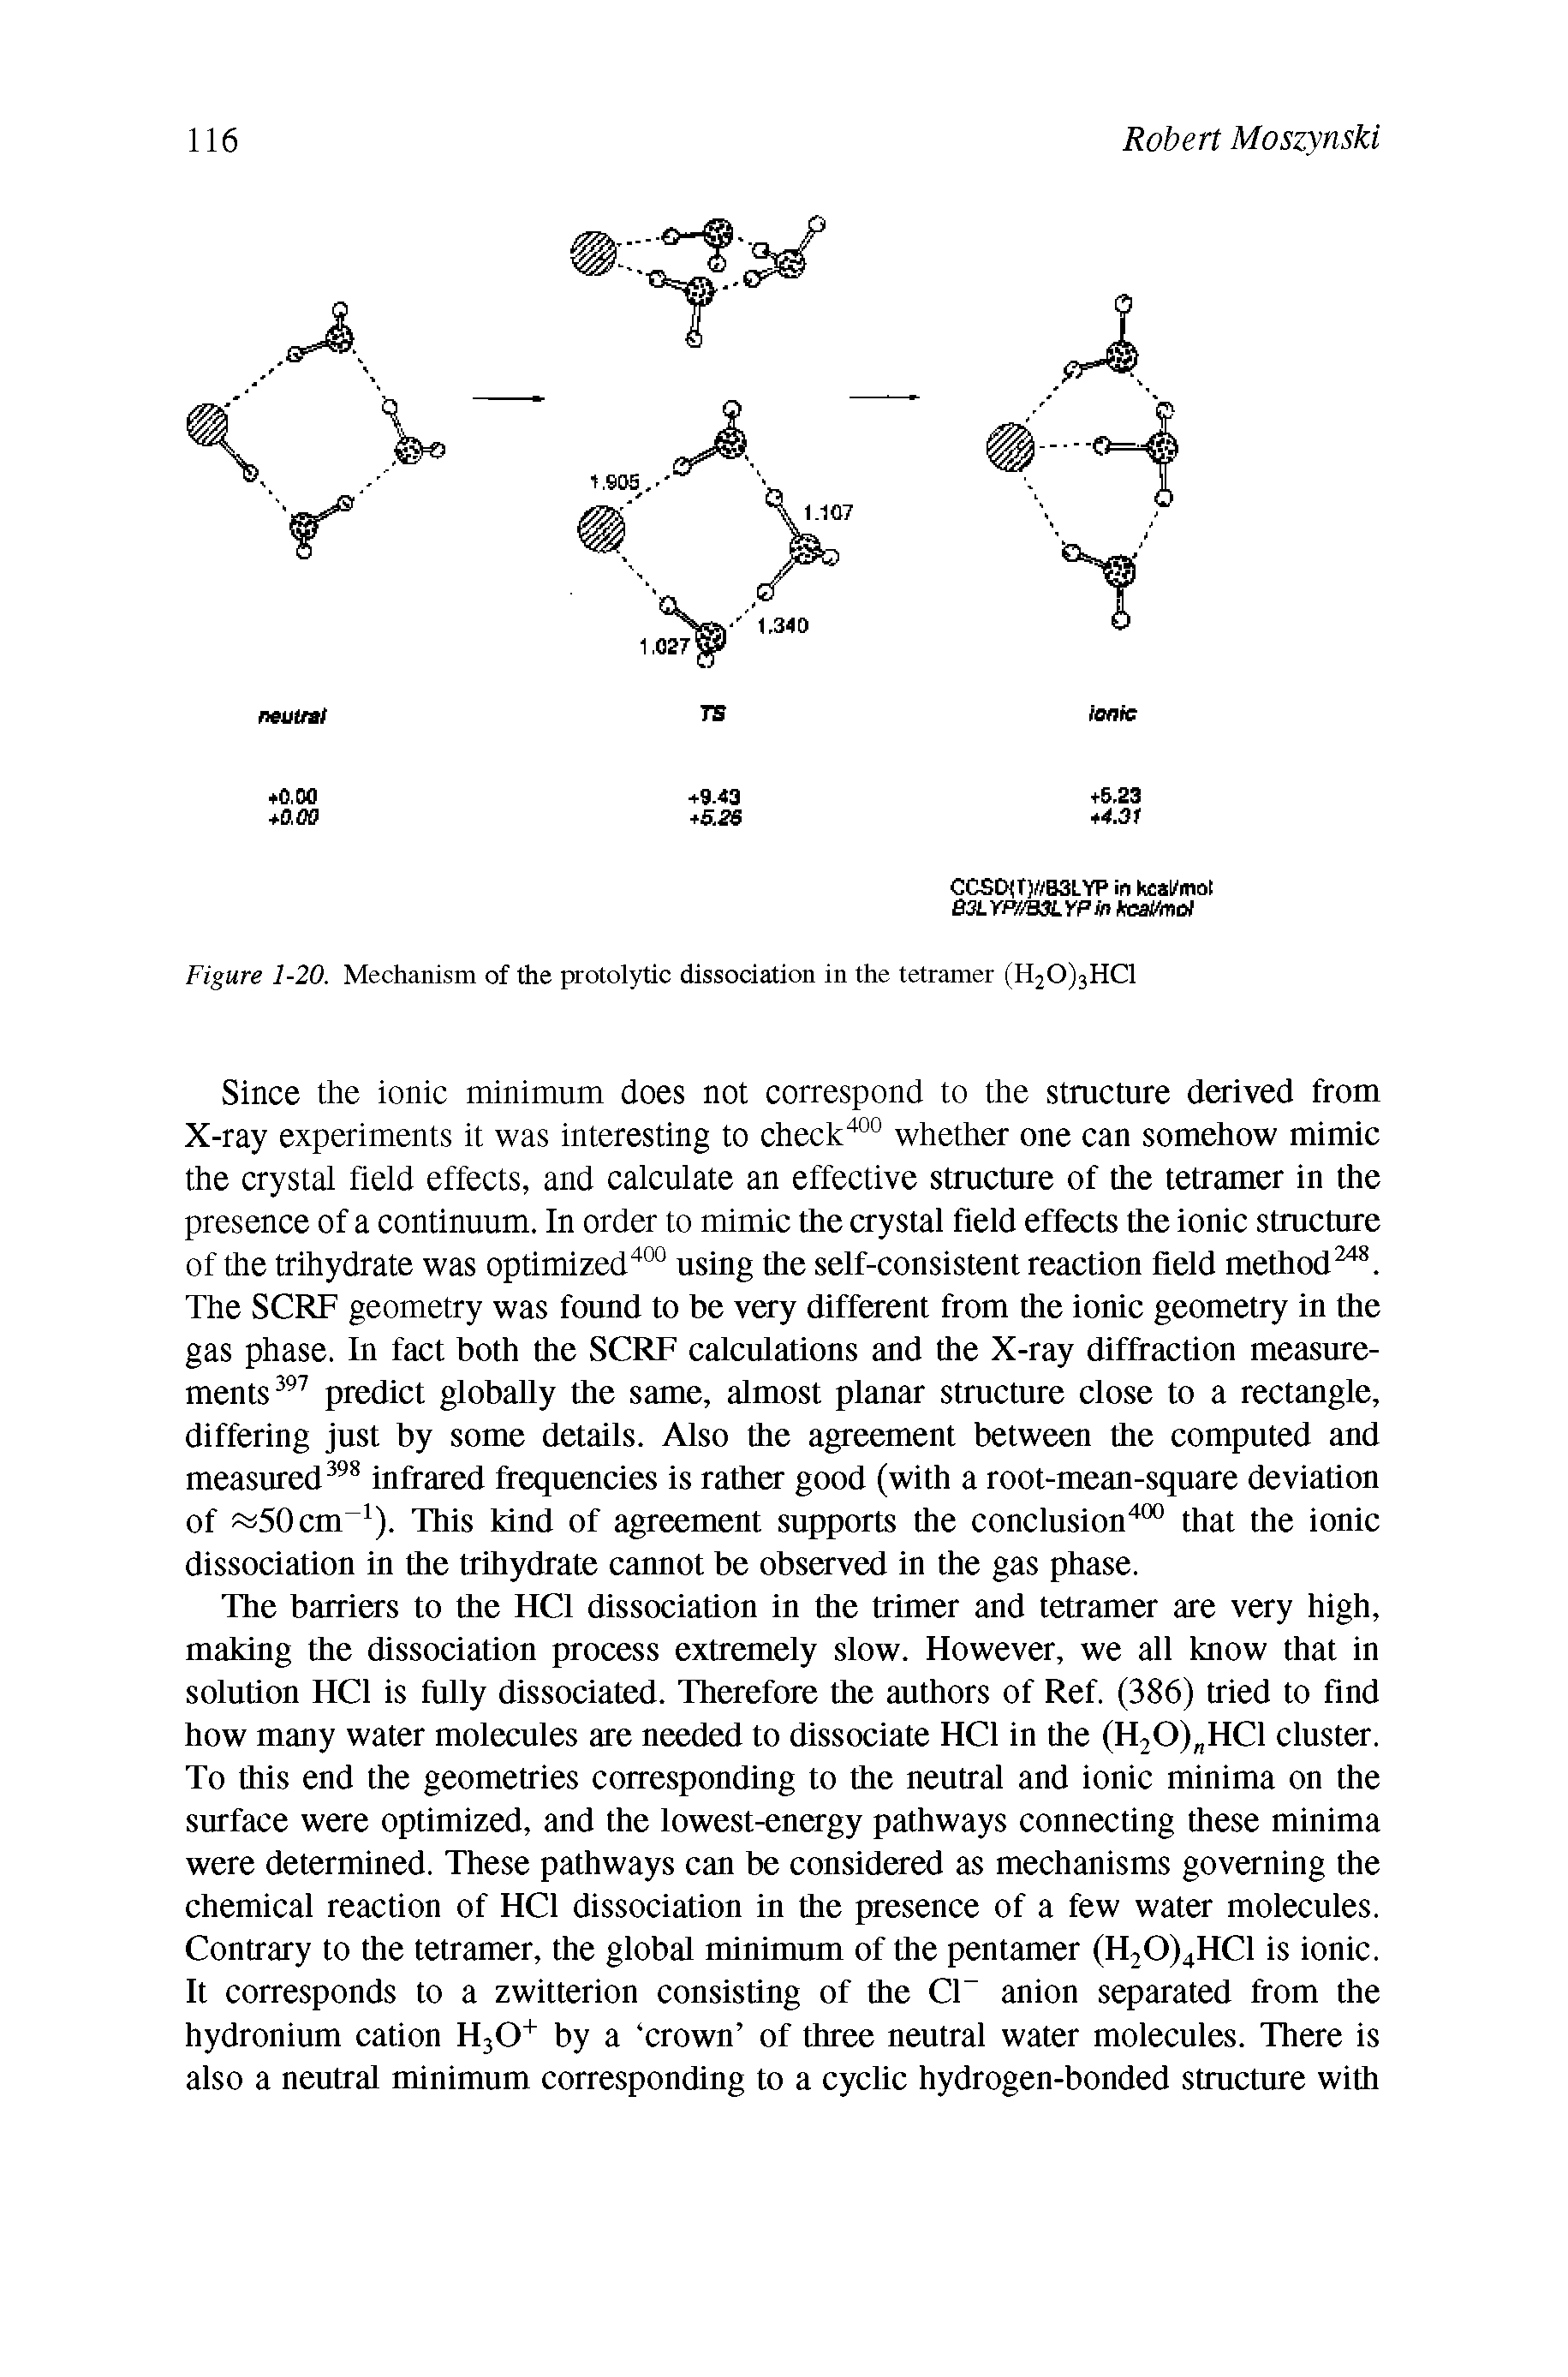 Figure 1-20. Mechanism of the protolytic dissociation in the tetramer (H20)3HC1...